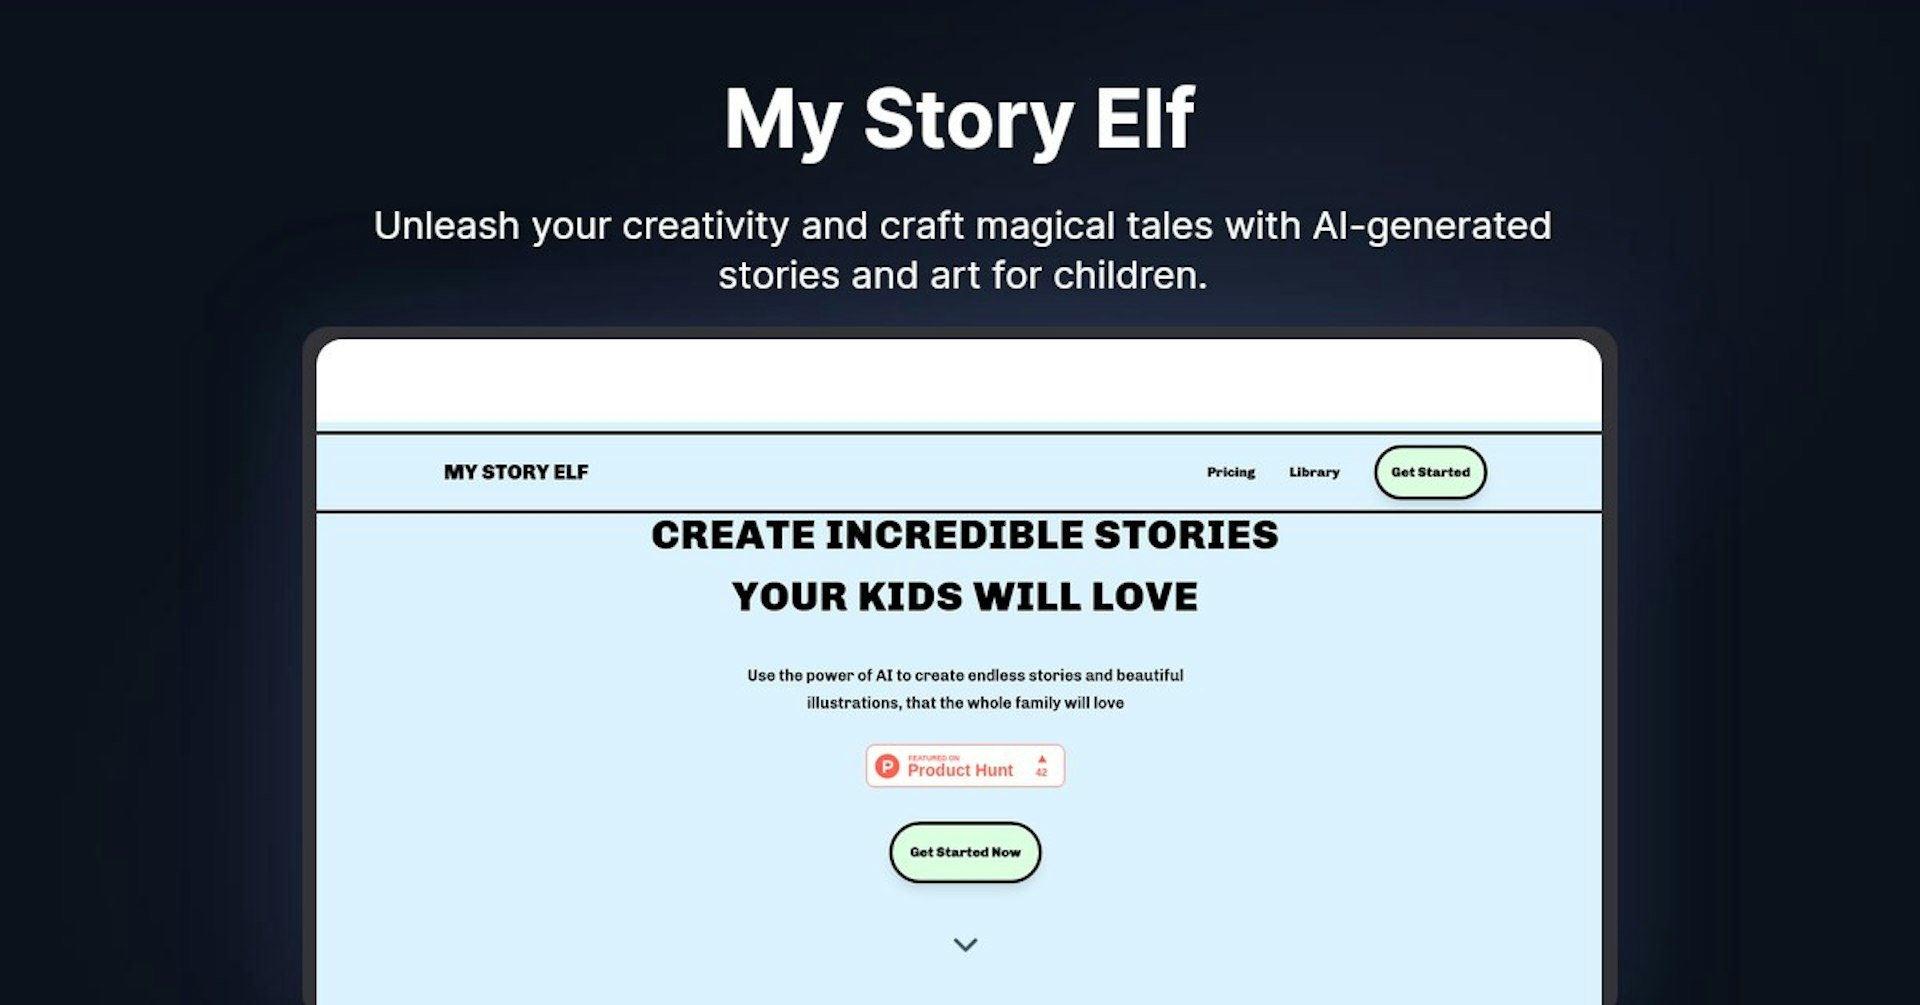 My Story Elf